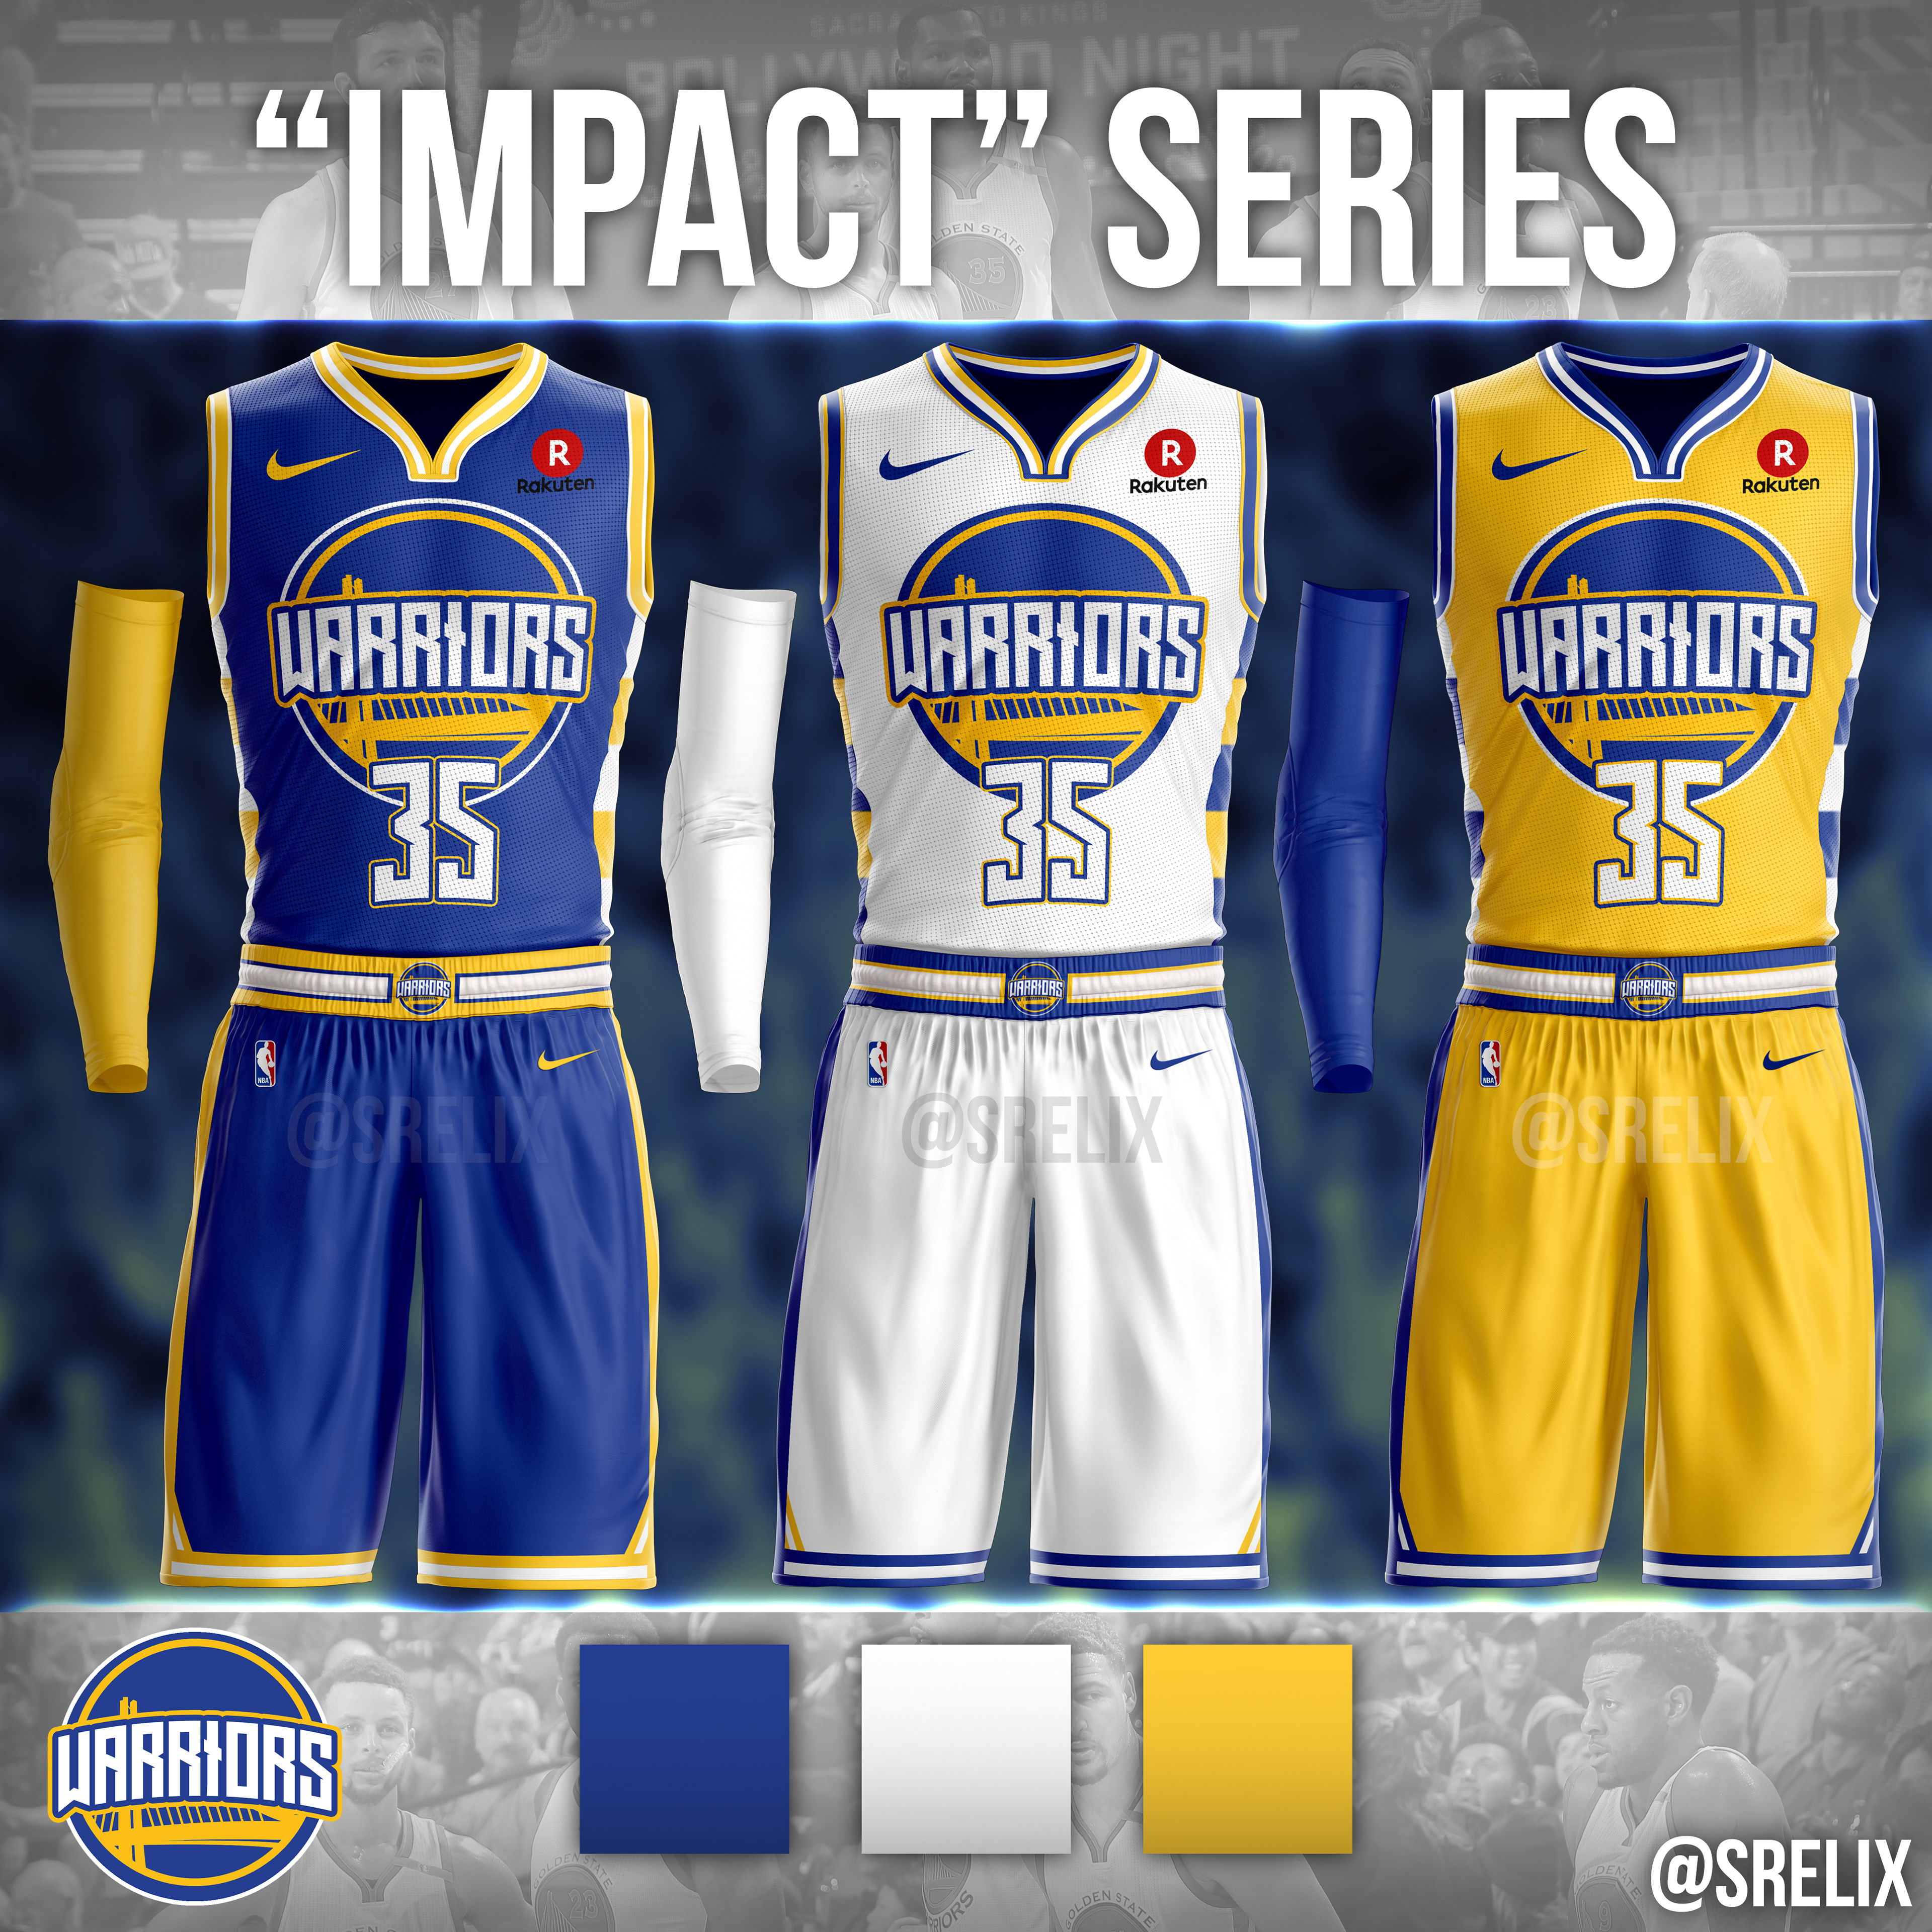 SRELIX Portfolio - NBA Jersey Concepts